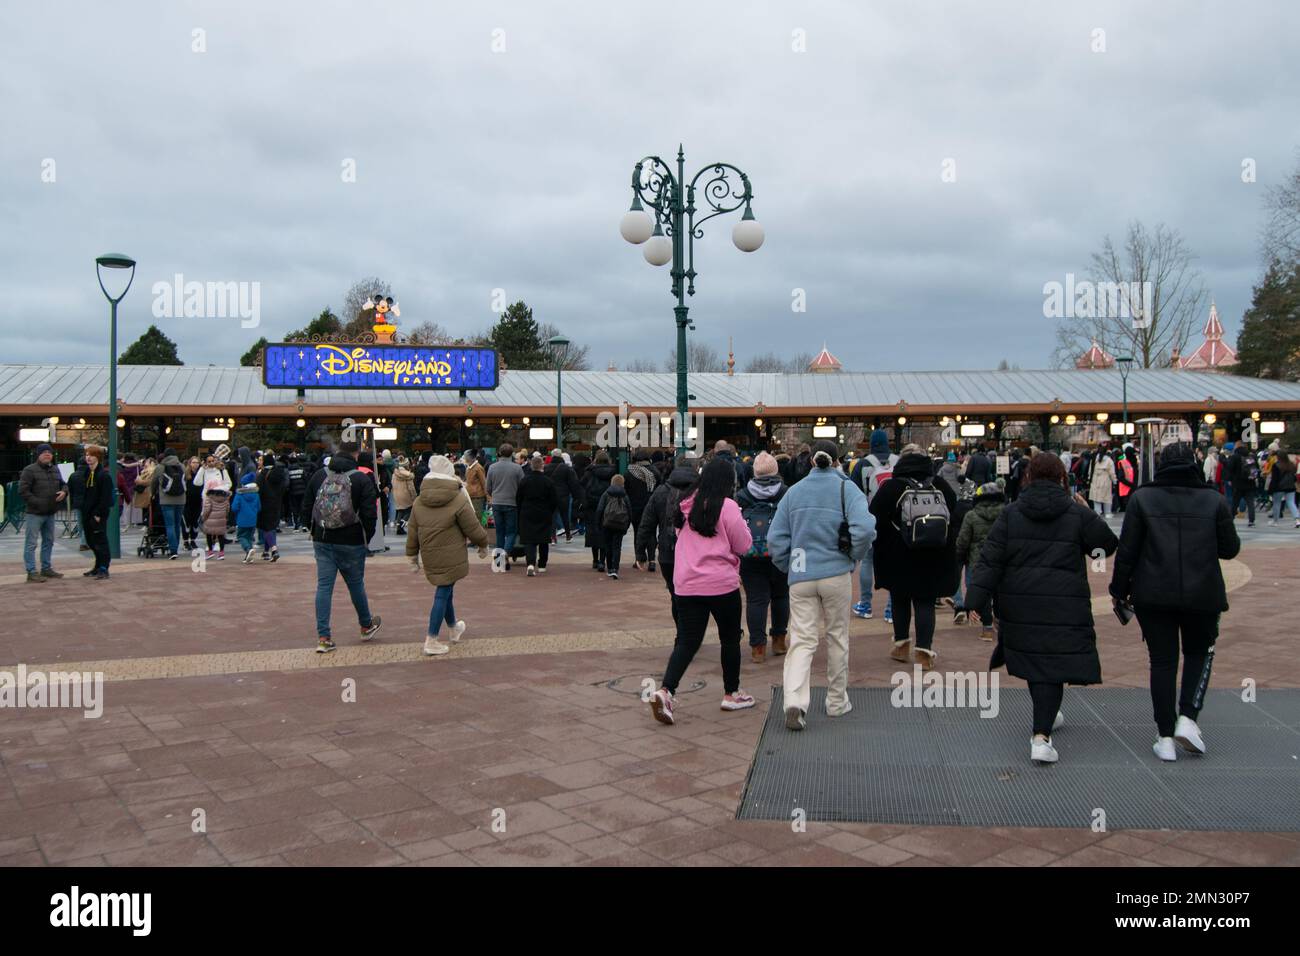 Visiting Paris, Disneyland Park on winter, Walt Disney Paris attrition Park. Going to Disneyland in Paris, Europe. Fun and amusement parks. Stock Photo